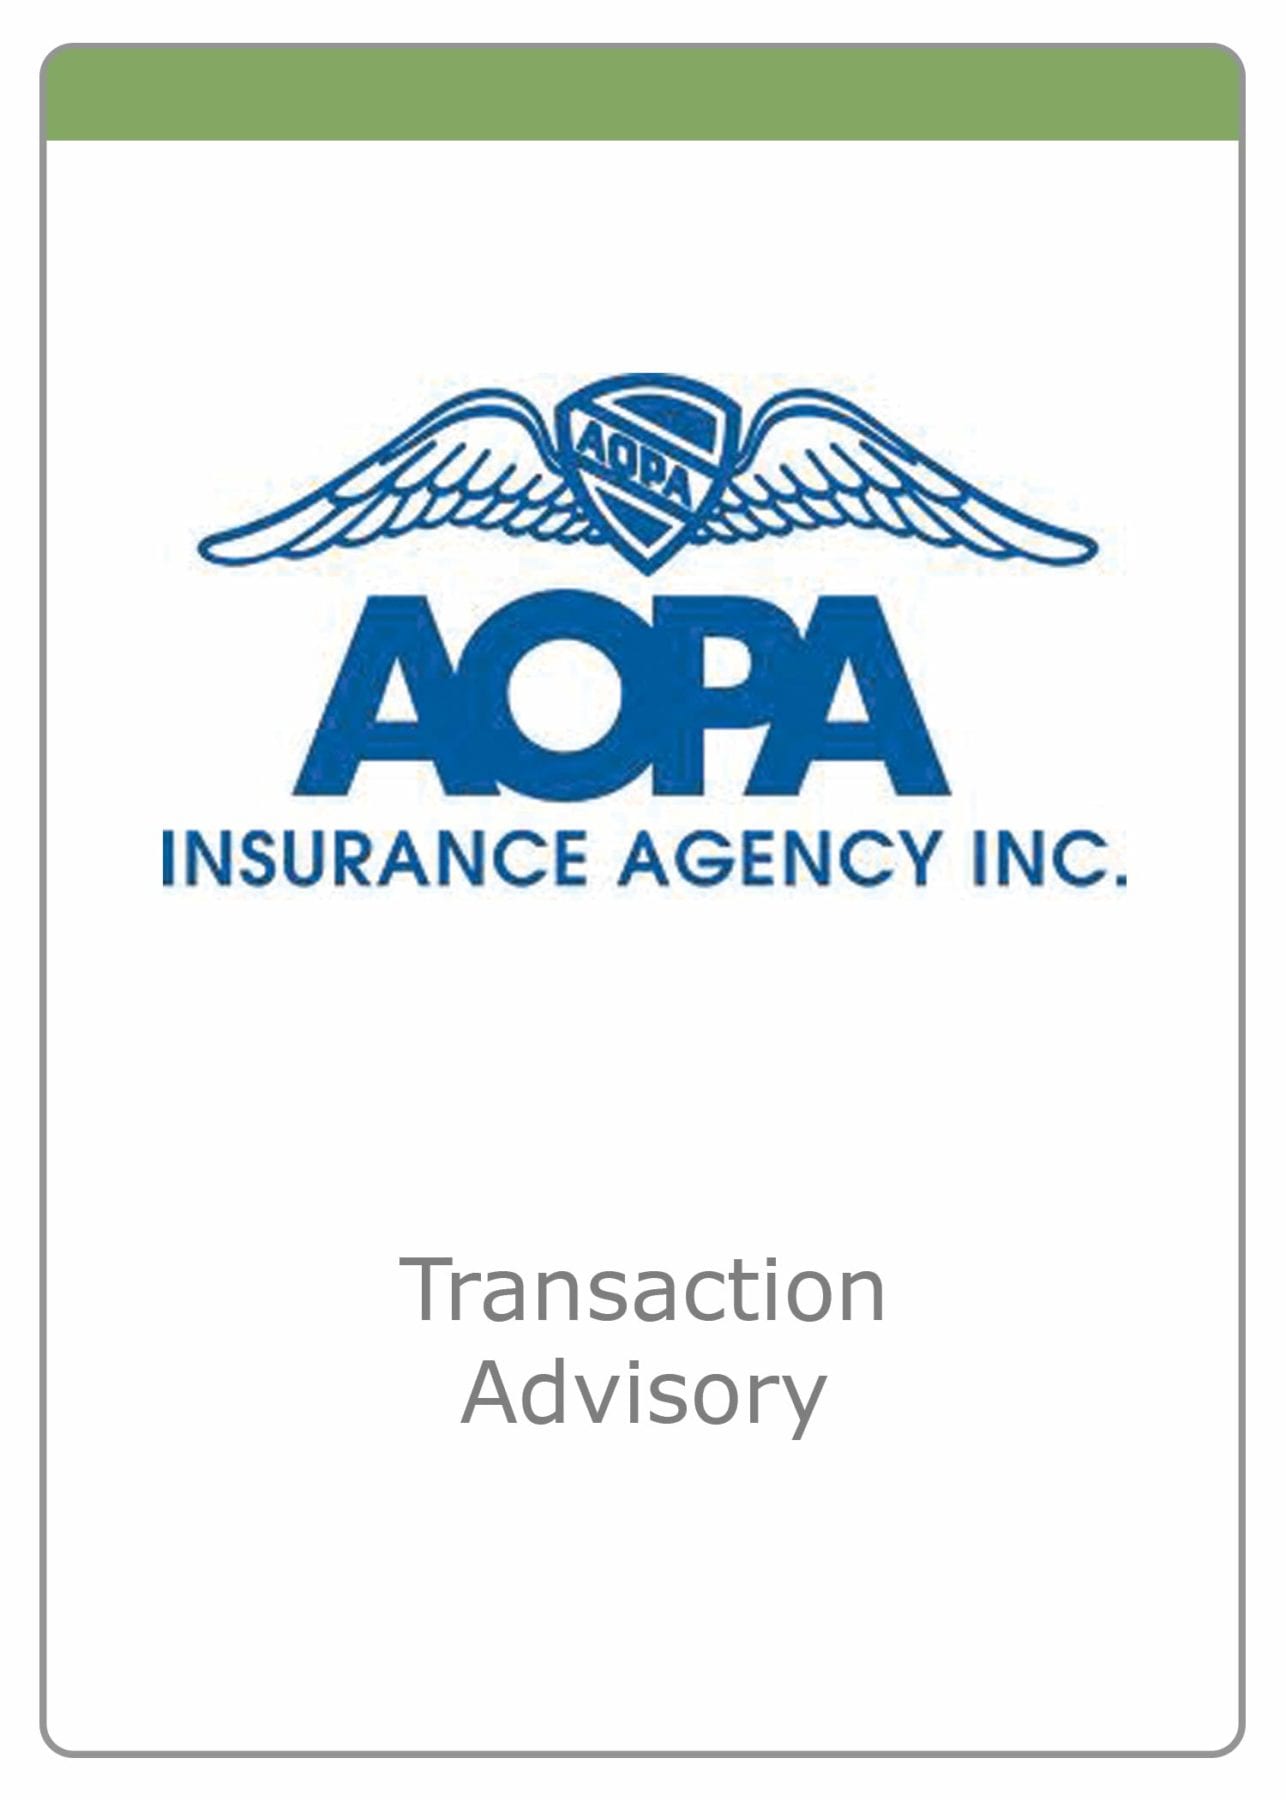 AOPA Insurance Agency - Transaction Advisory - The McLean Group